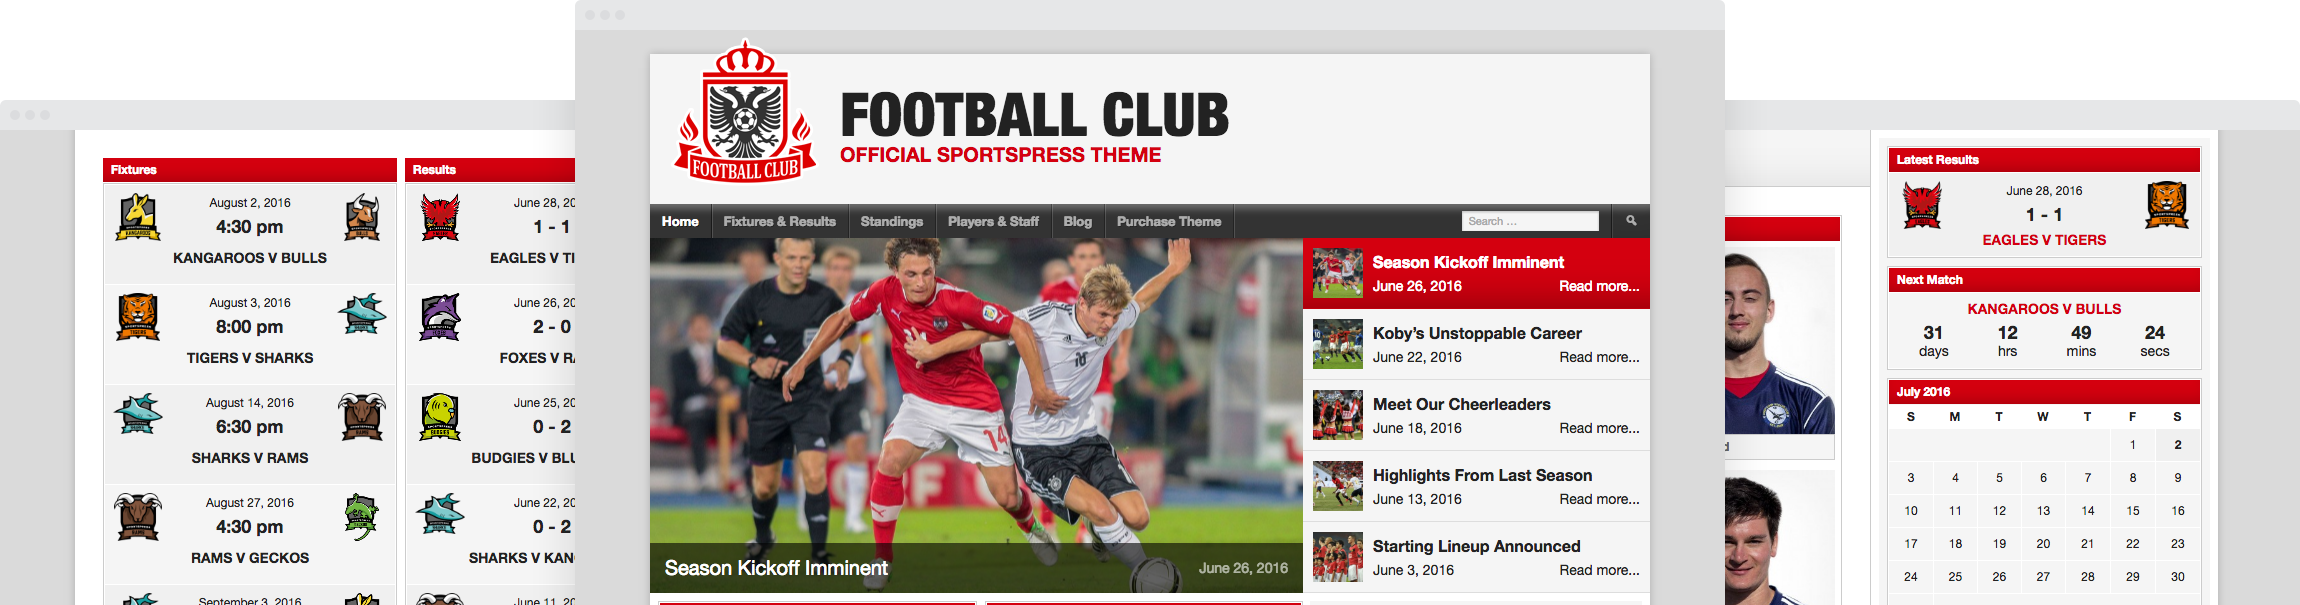 Football Club SportsPress Theme